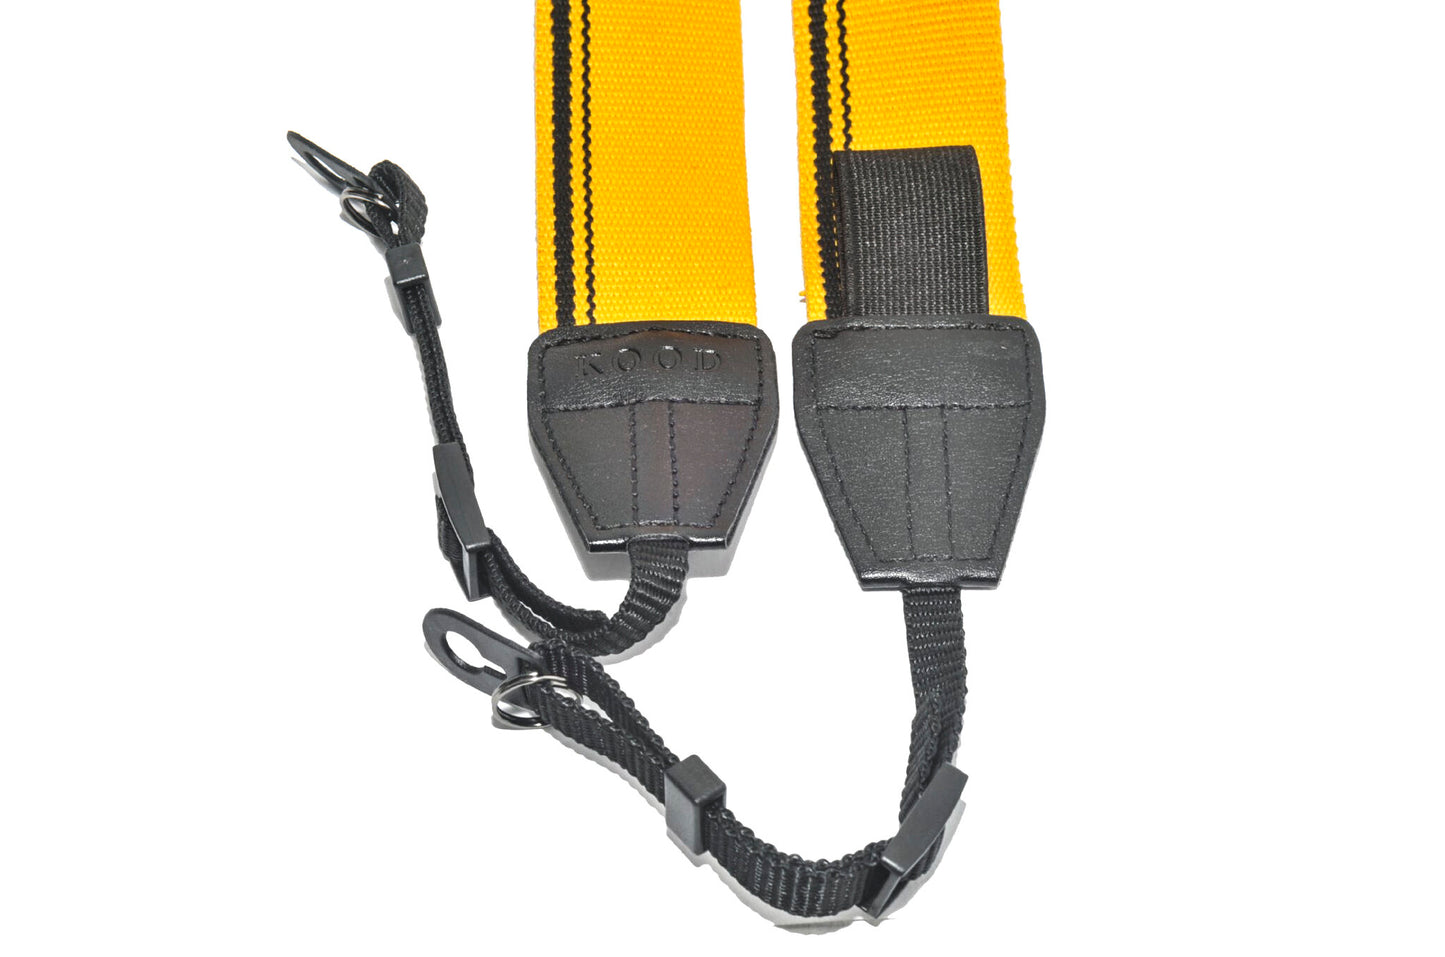 Kood High Quality Retro Style DSLR Camera Neck / Shoulder Strap Yellow and Black